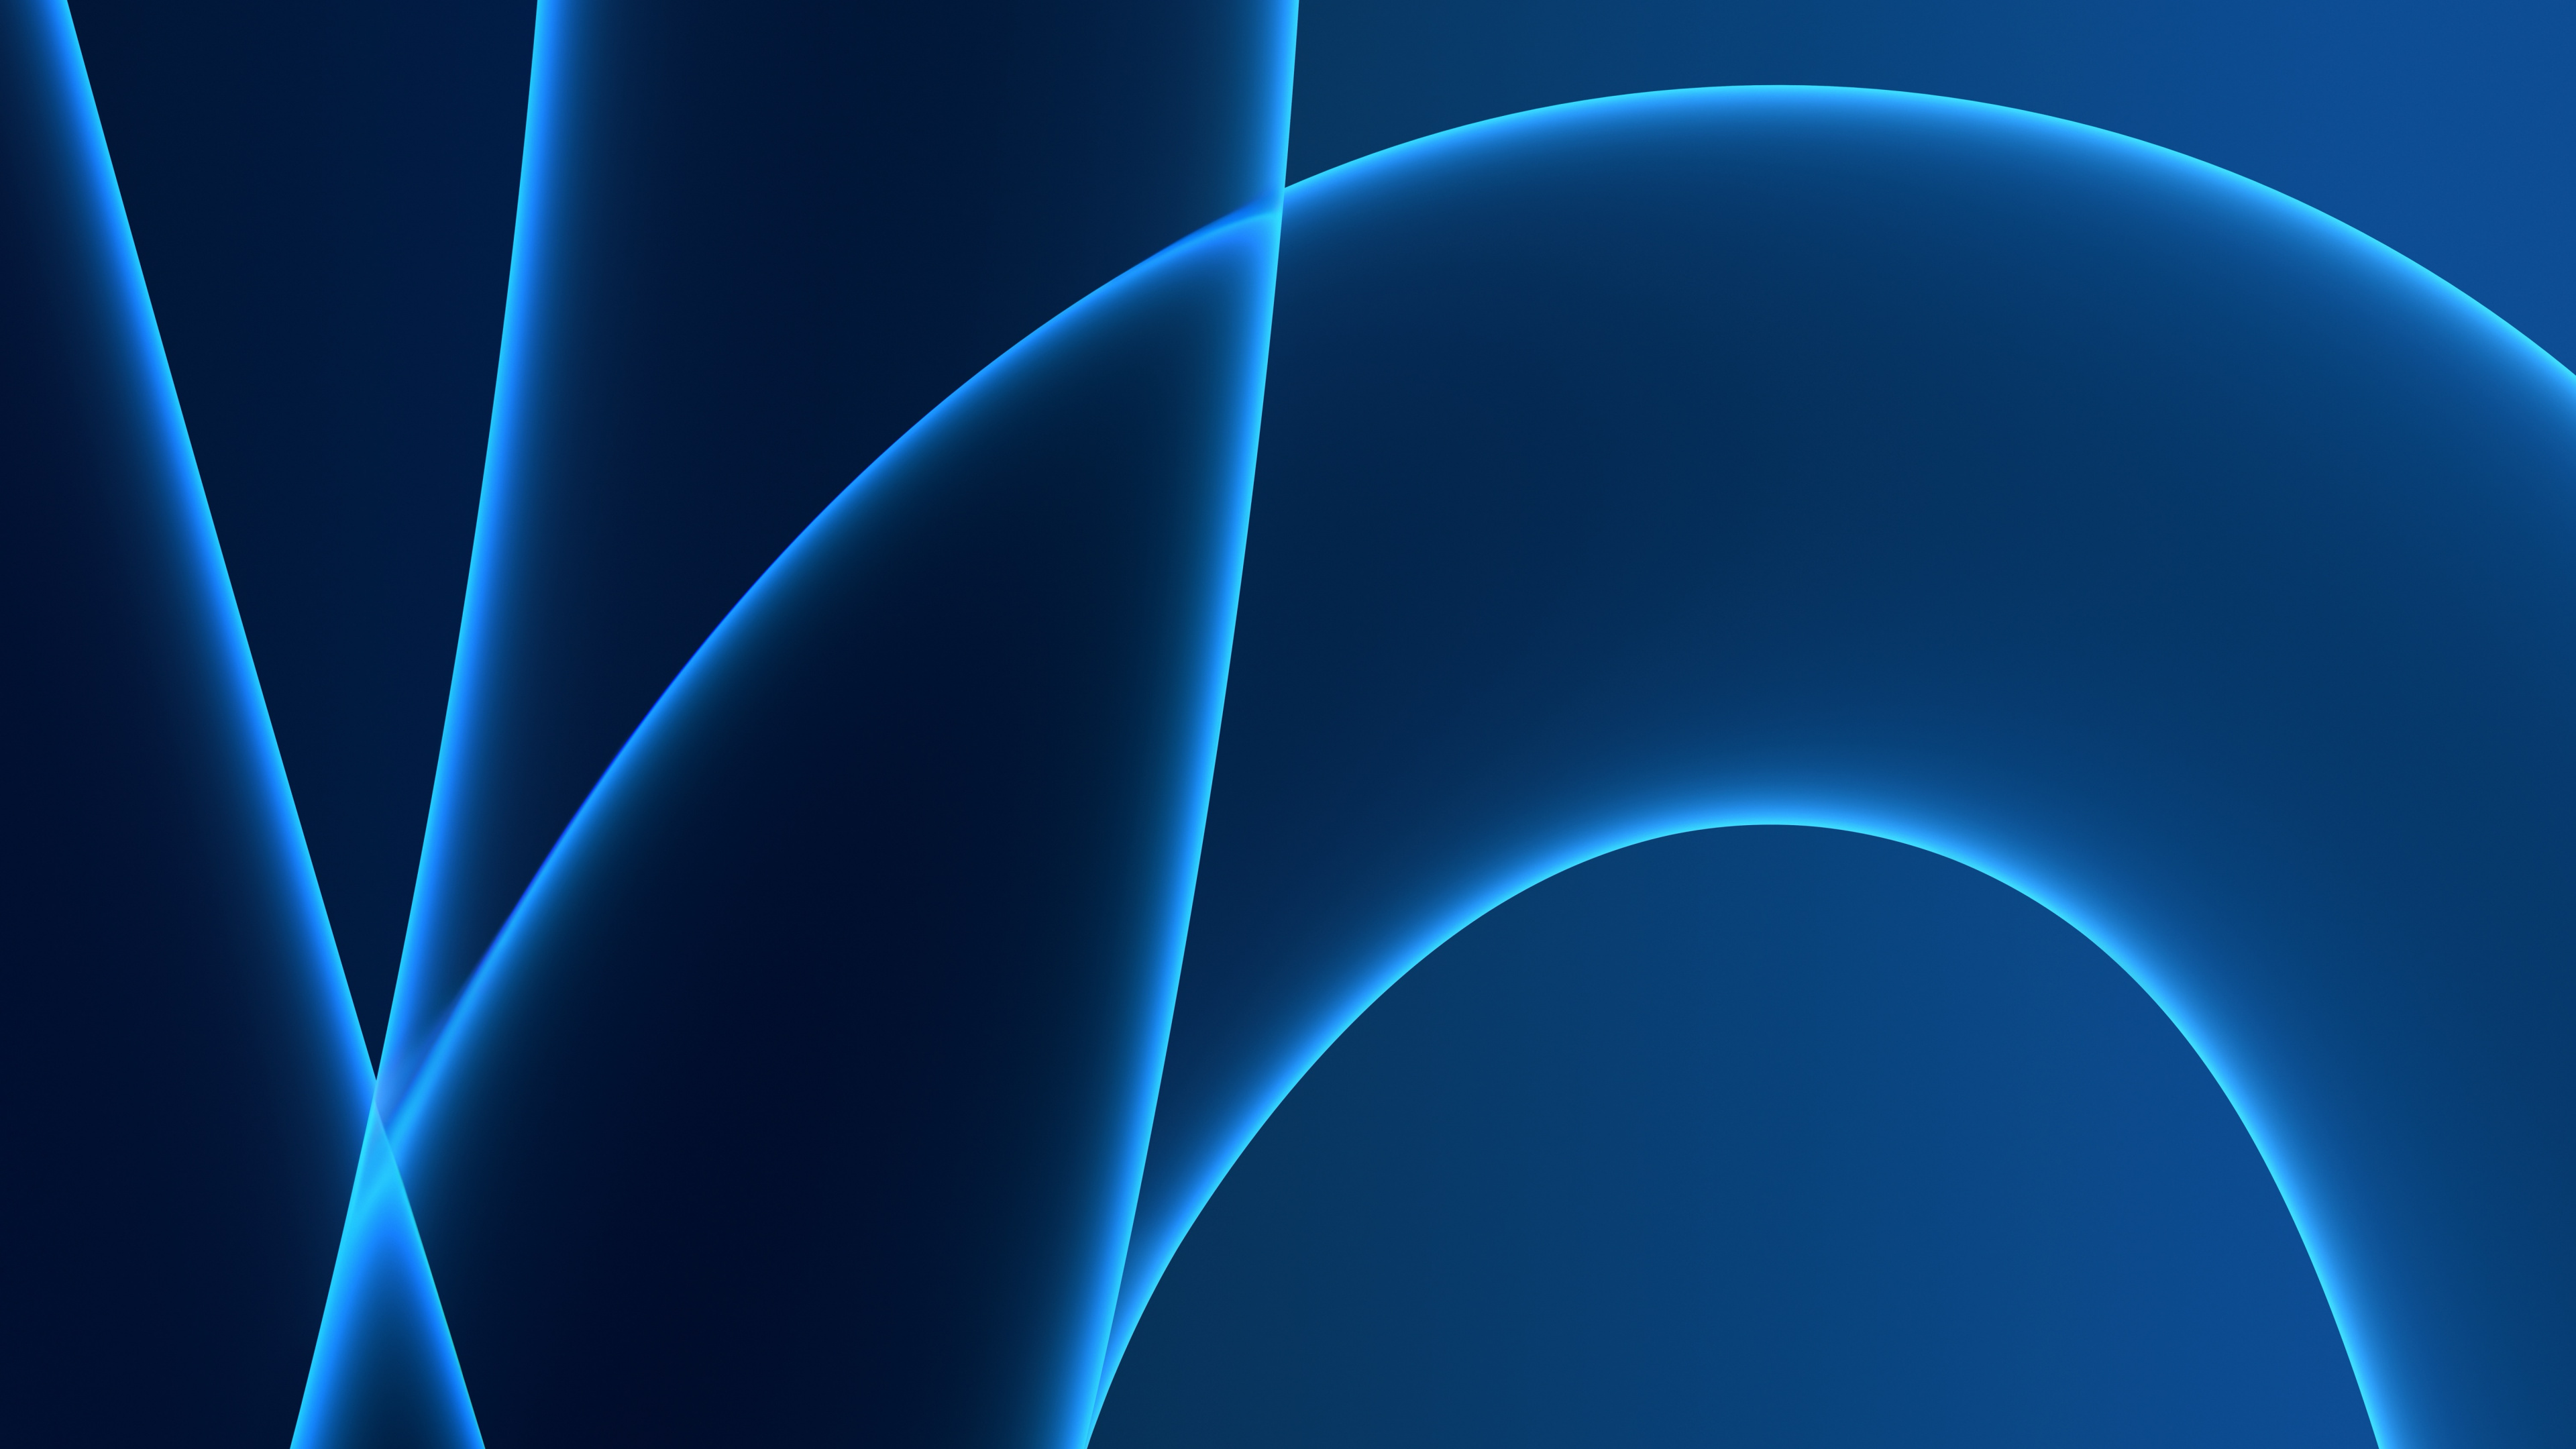 Dark Blue IMac Color Matching Wallpaper for IPad or Desktop. Wallpaper in 3840x2160 Resolution